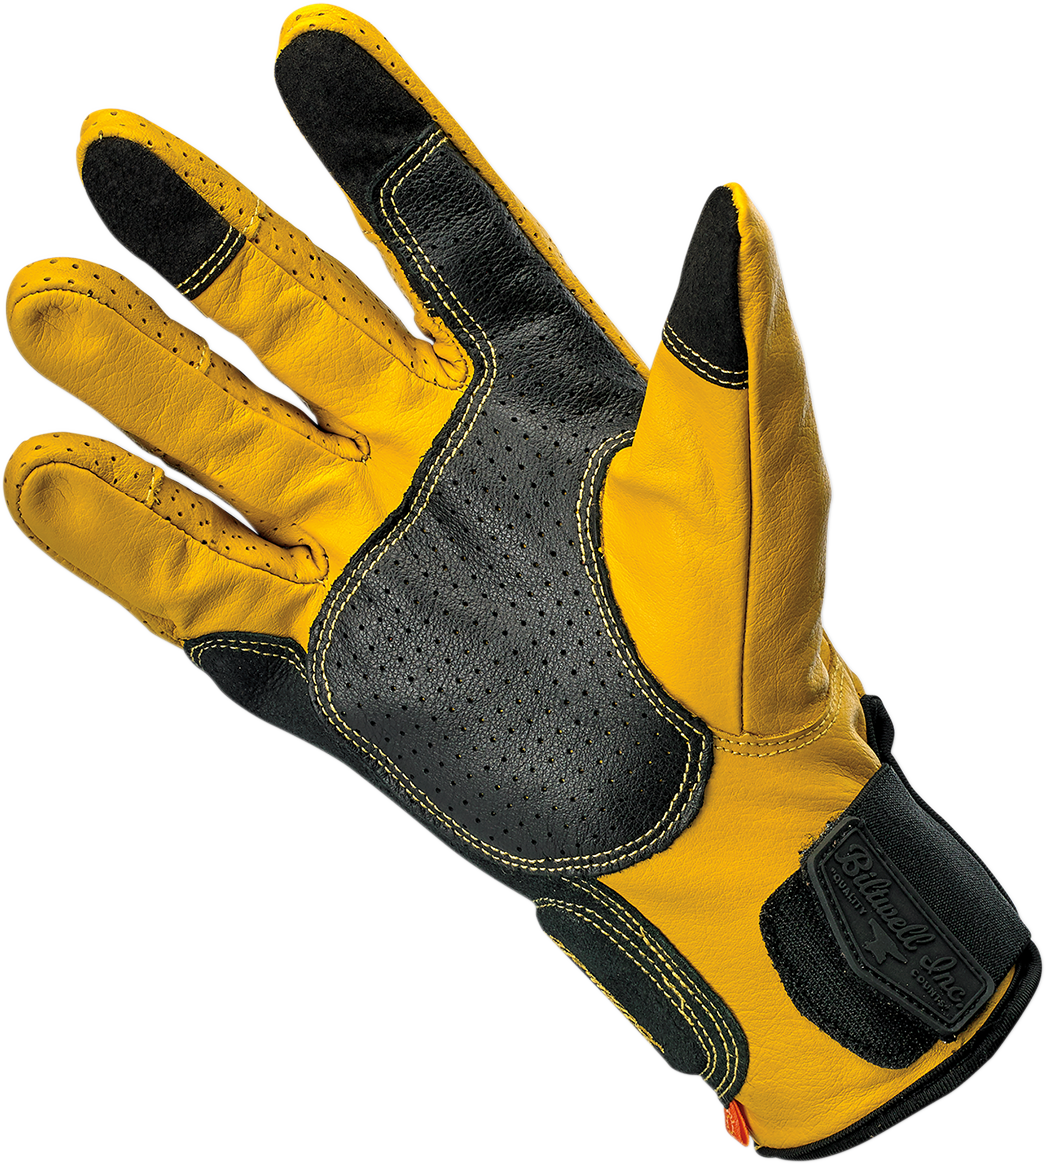 BILTWELL Borrego Gloves - Gold/Black - Medium 1506-0701-303